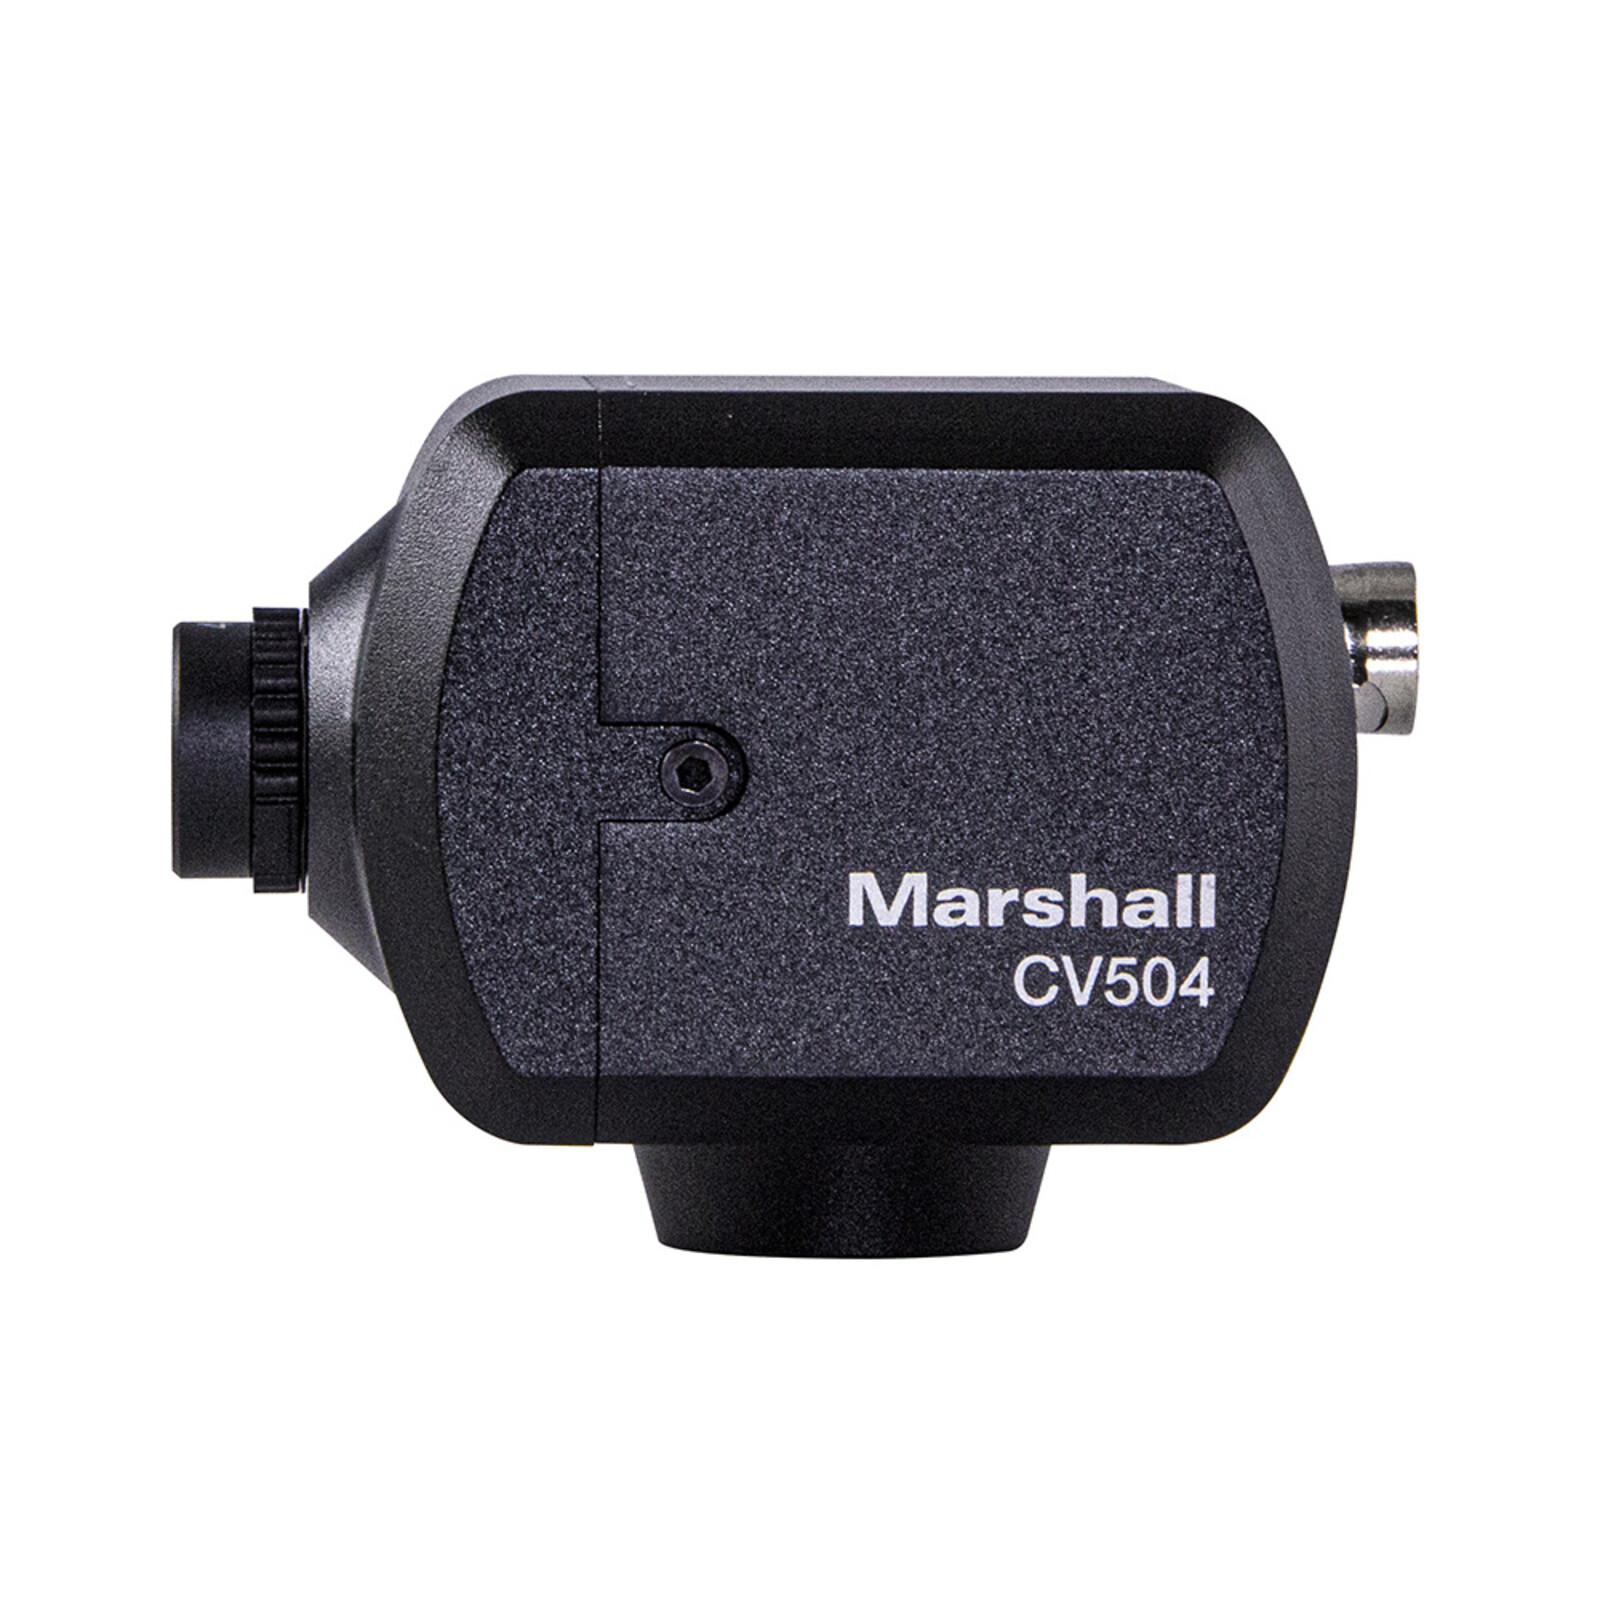 Marshall Mini Broadcast Camera with 4mm Interchangeable Lens – 3G-SDI Output (New Sensor)